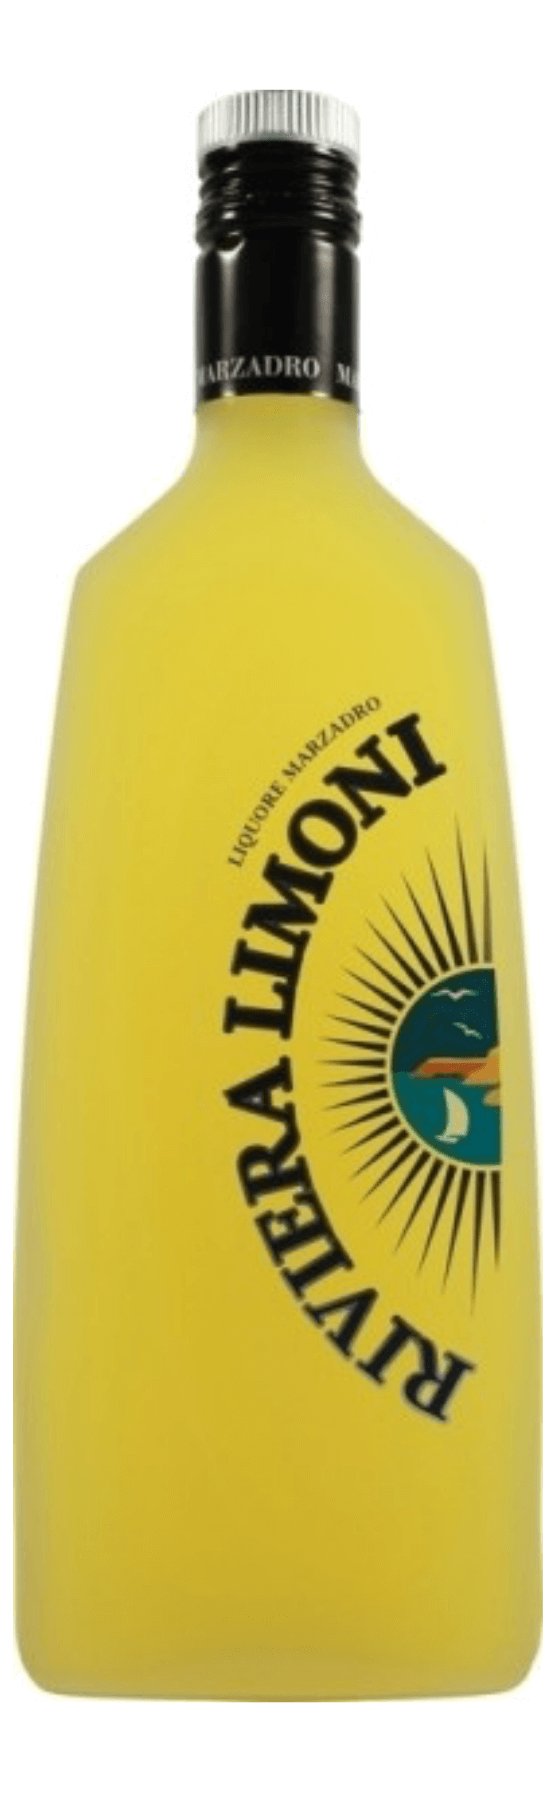 Marzadro Limoncino Riviera dei Limoni Zitronenlikör